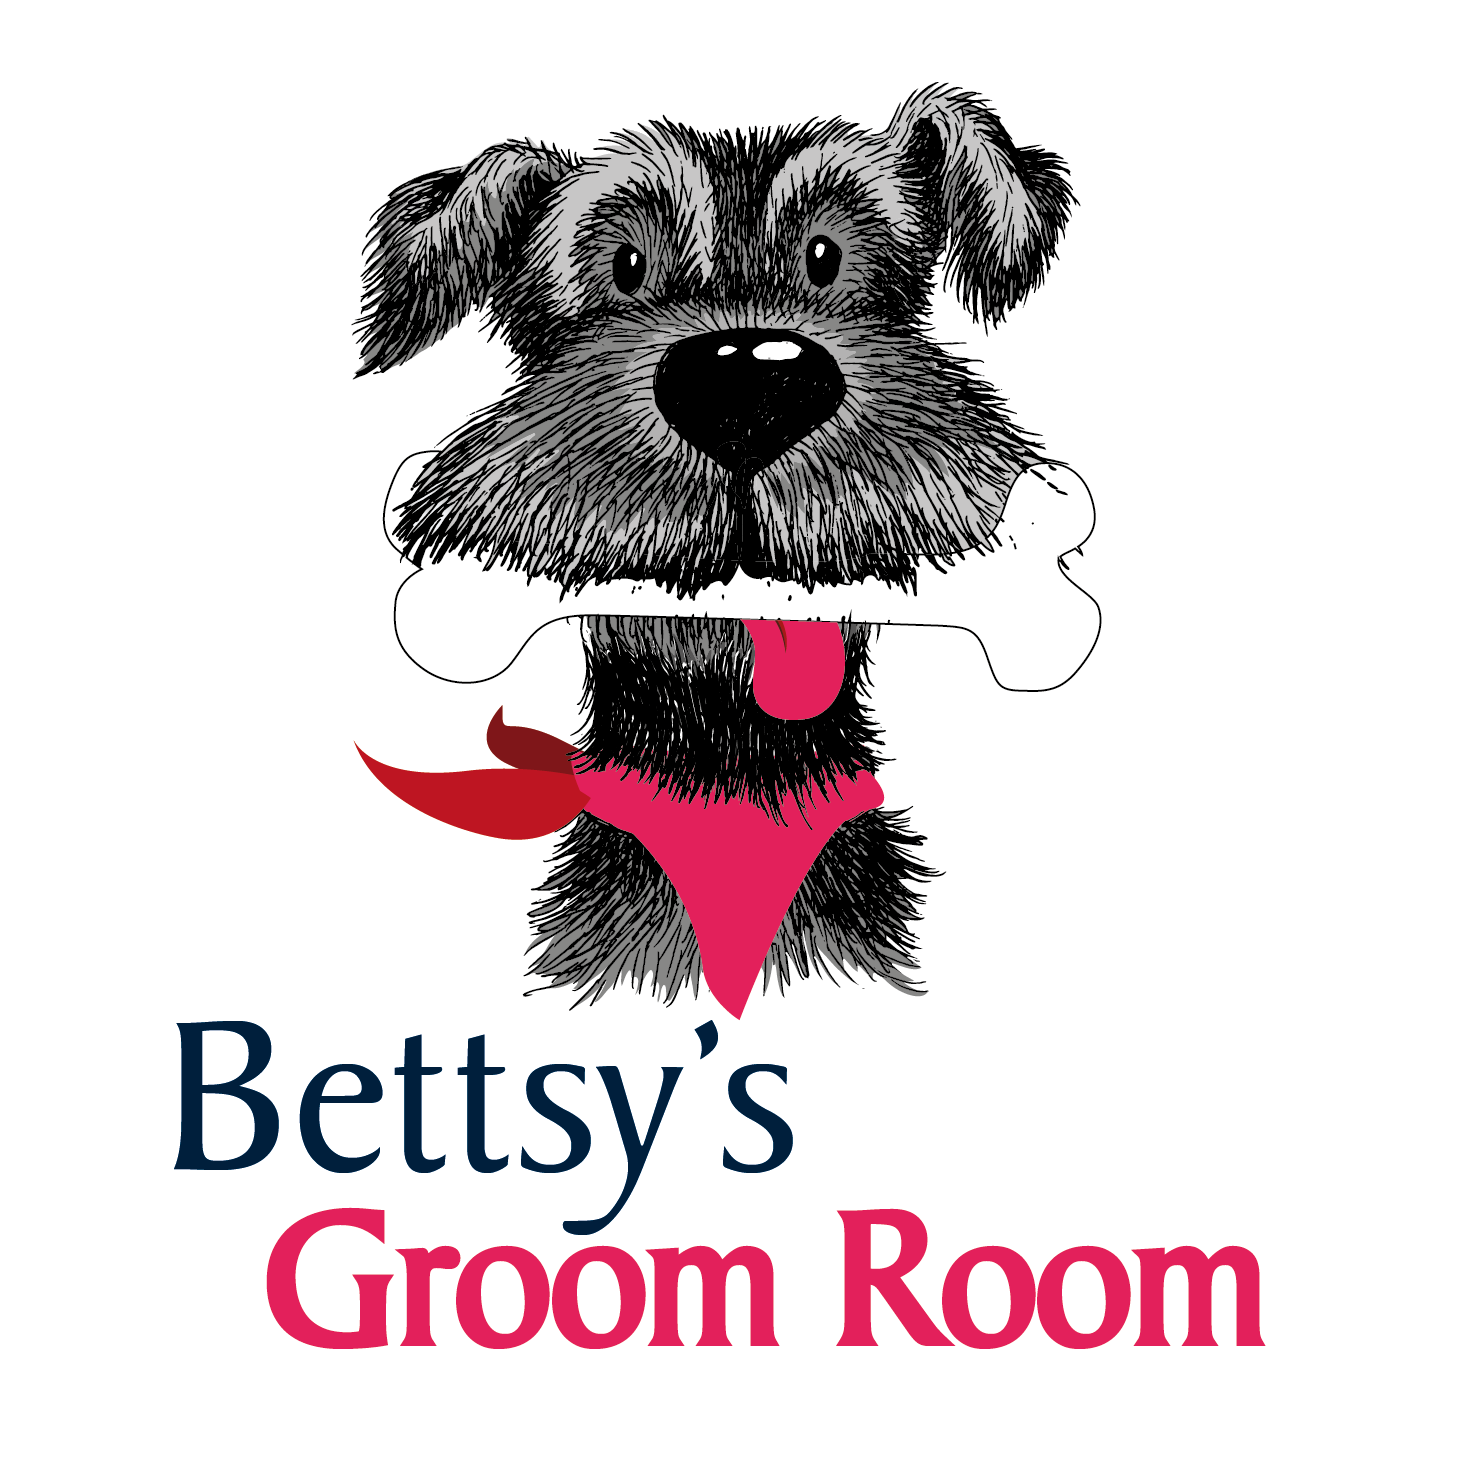 Bettsys Groom Room Selby